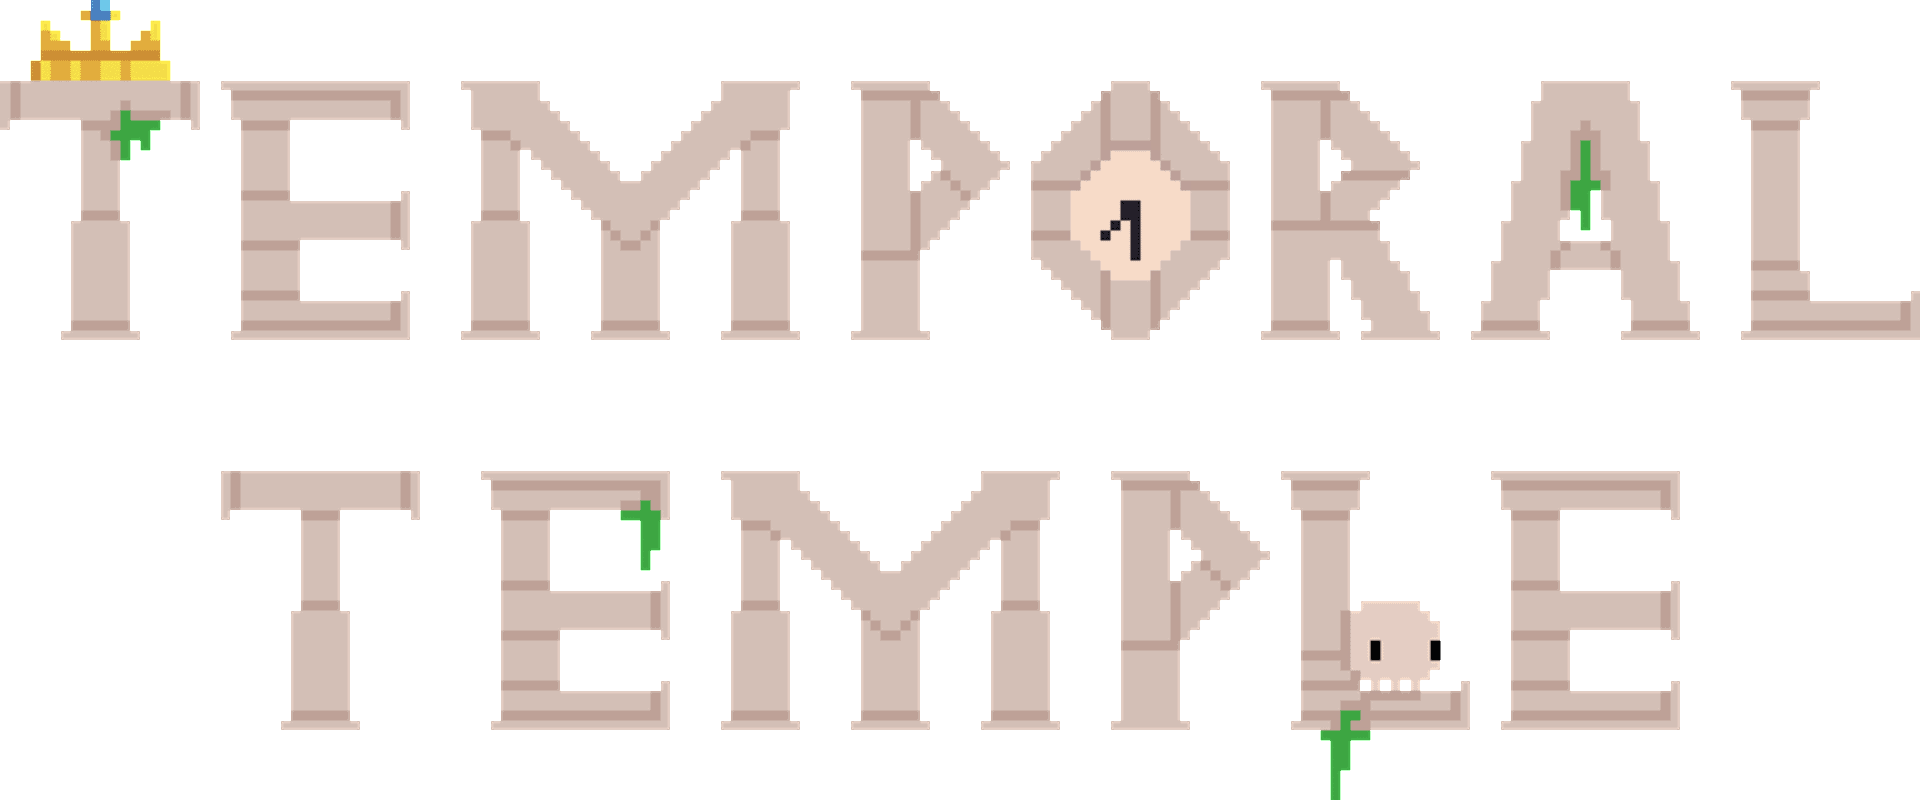 Temporal Temple